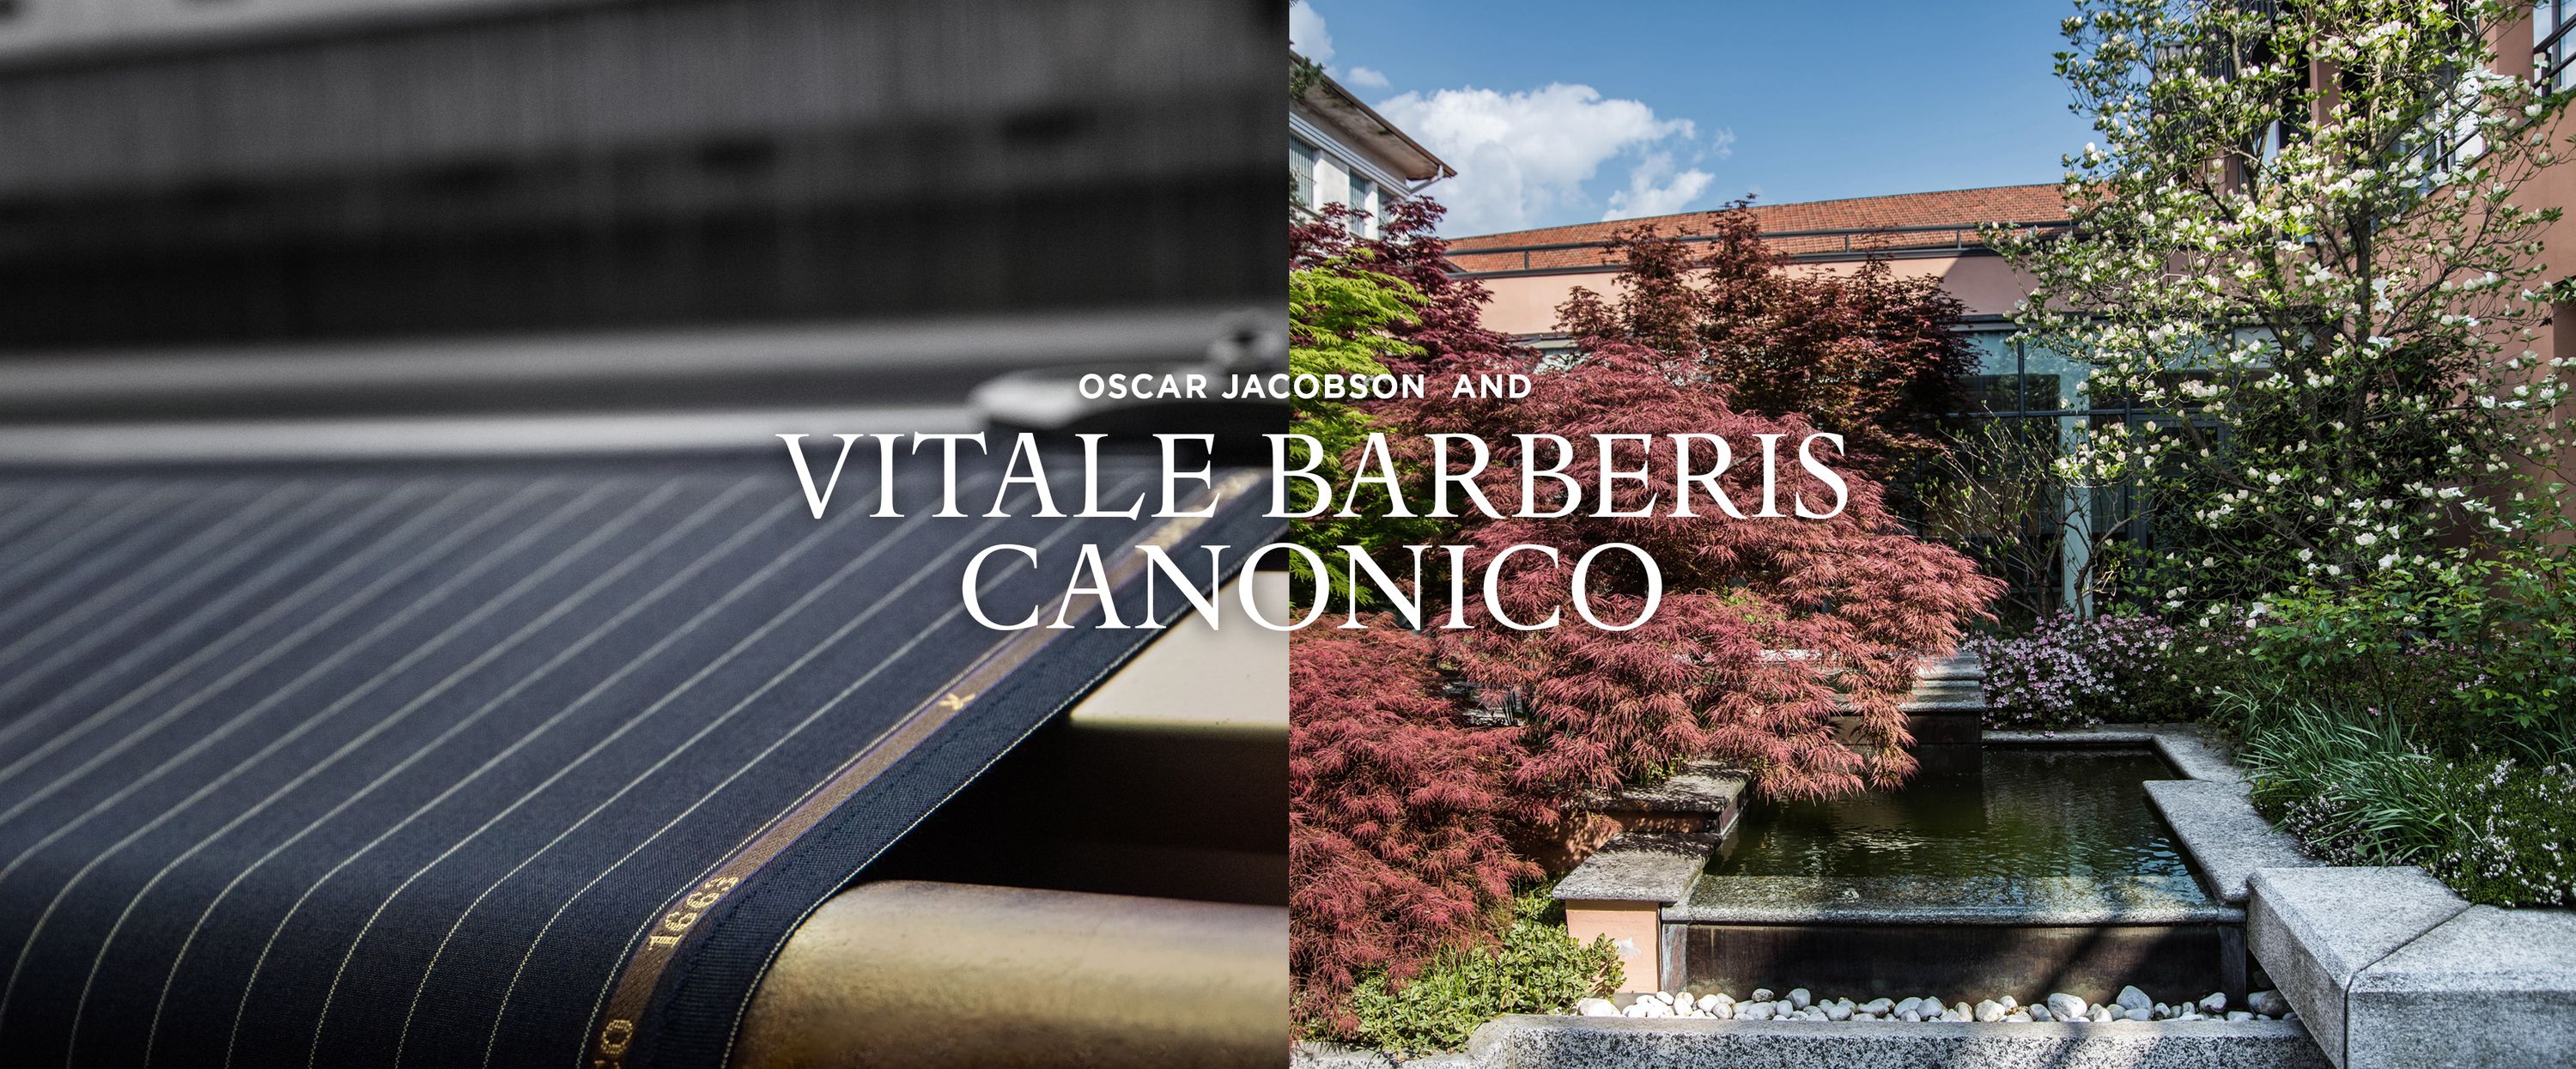 Read More About Vitale Barberis Canonico Oscar Jacobson